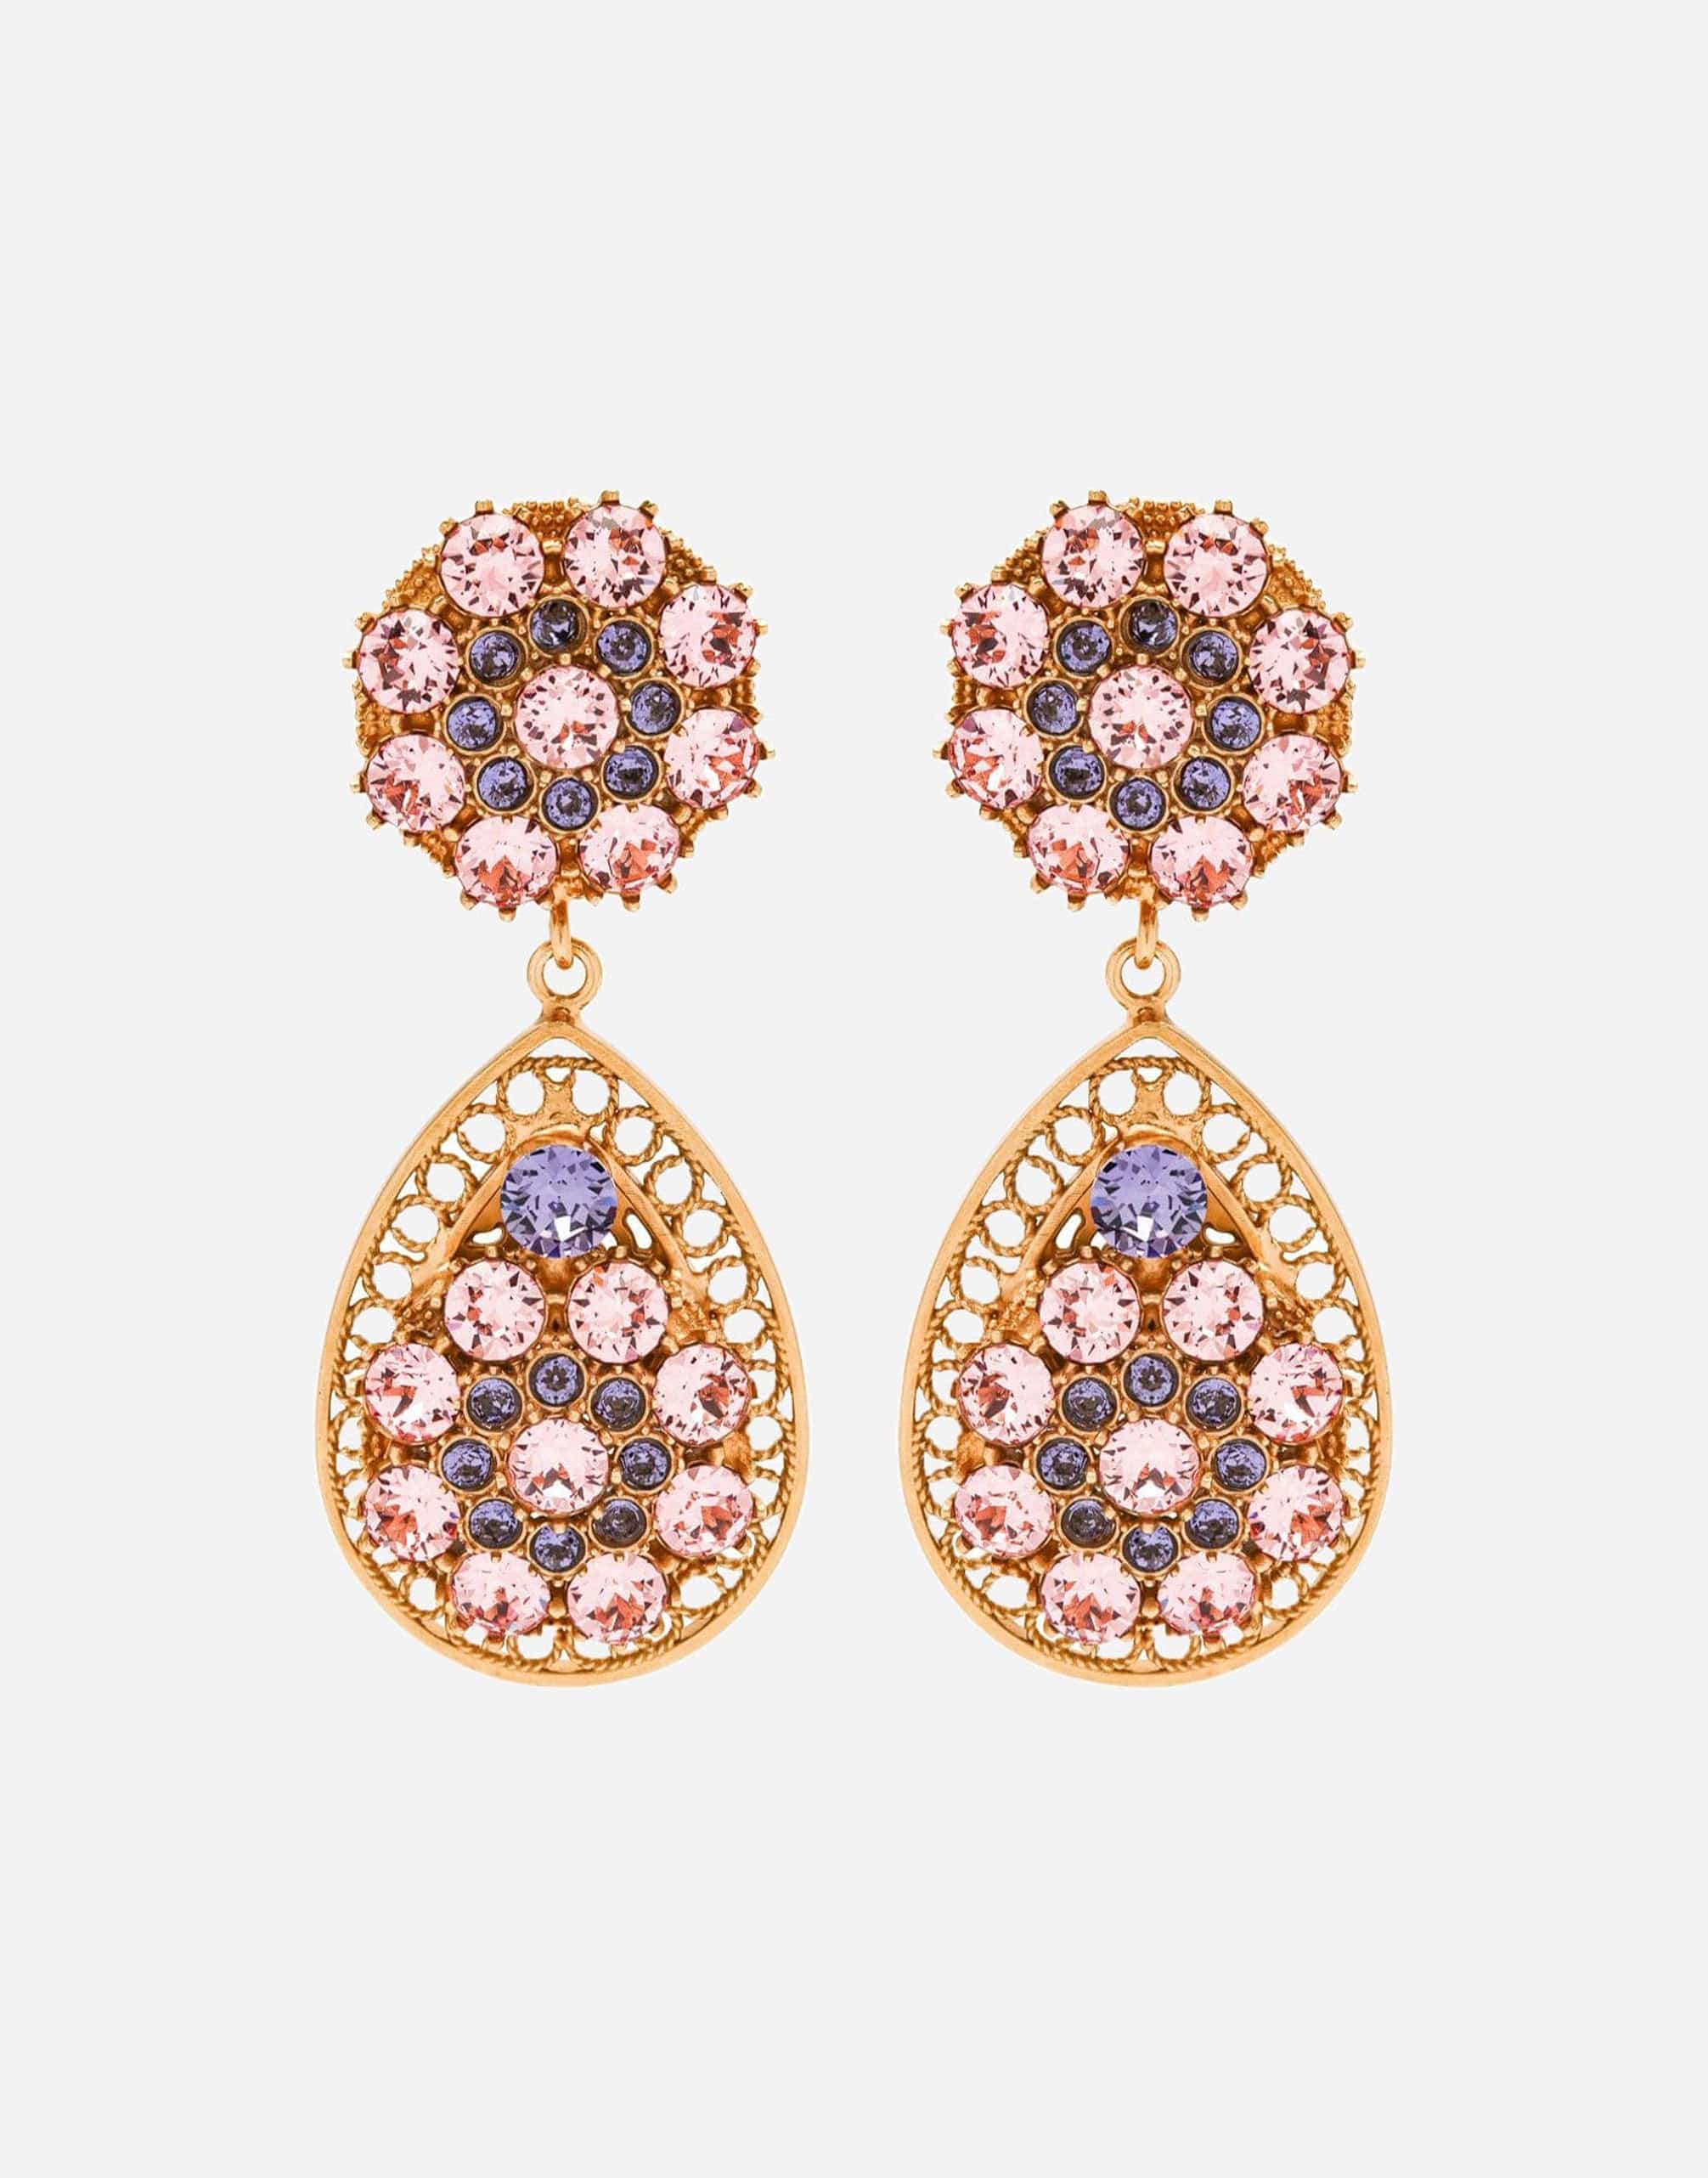 Dolce & Gabbana Embellished Clip-On Earrings